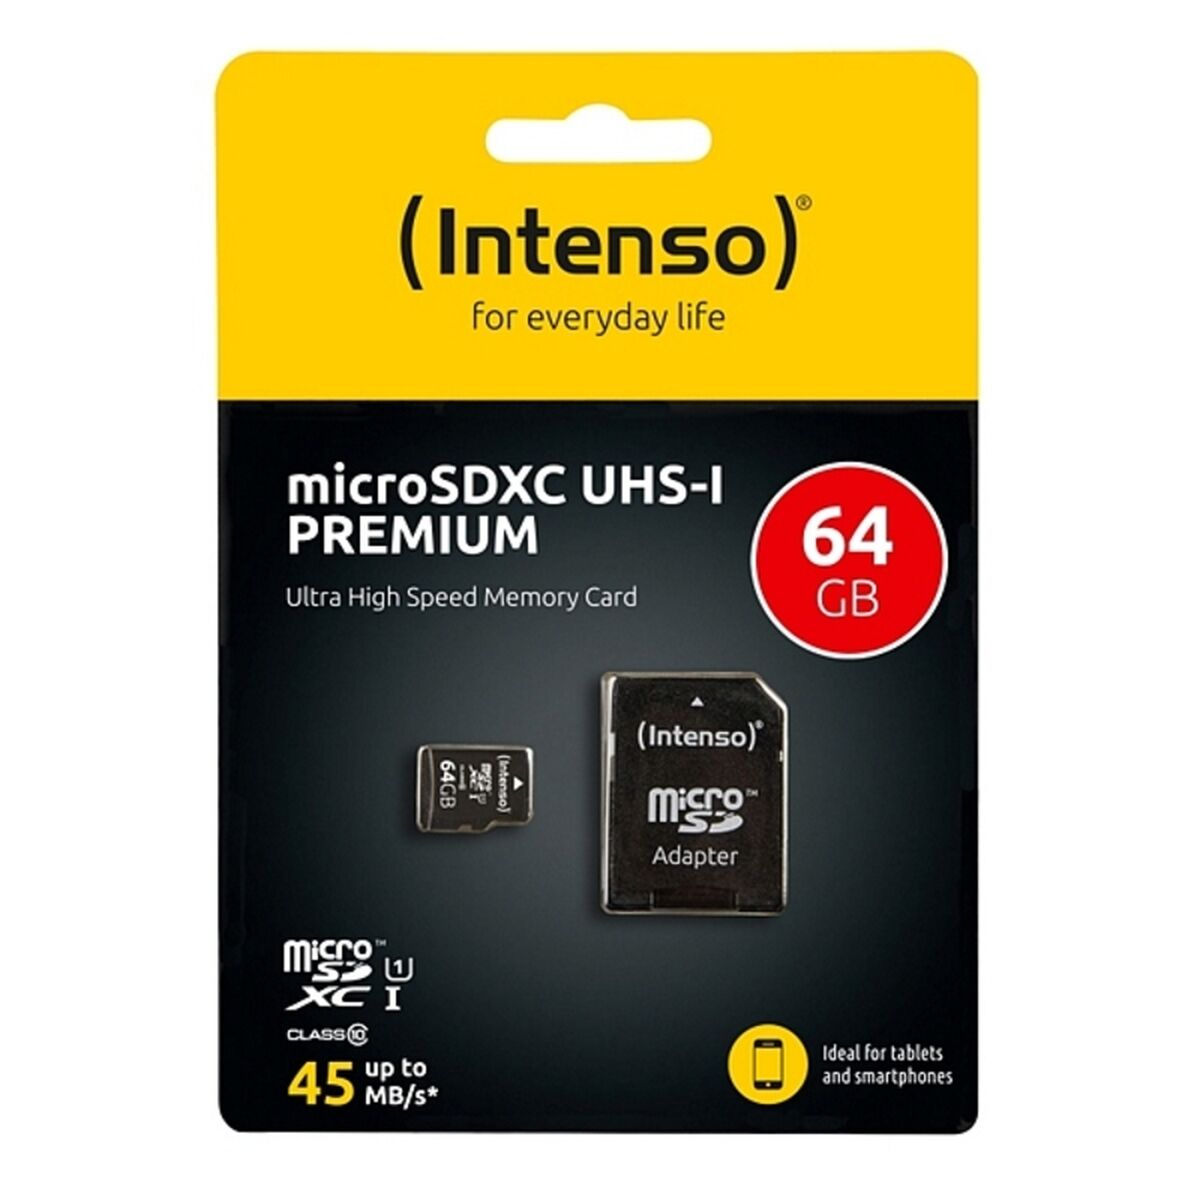 INTENSO 3423491 MICRO GB, 128GB UHS-1 Micro-SDXC MB/s Speicherkarte, 45 PREMIUM, SDXC 128